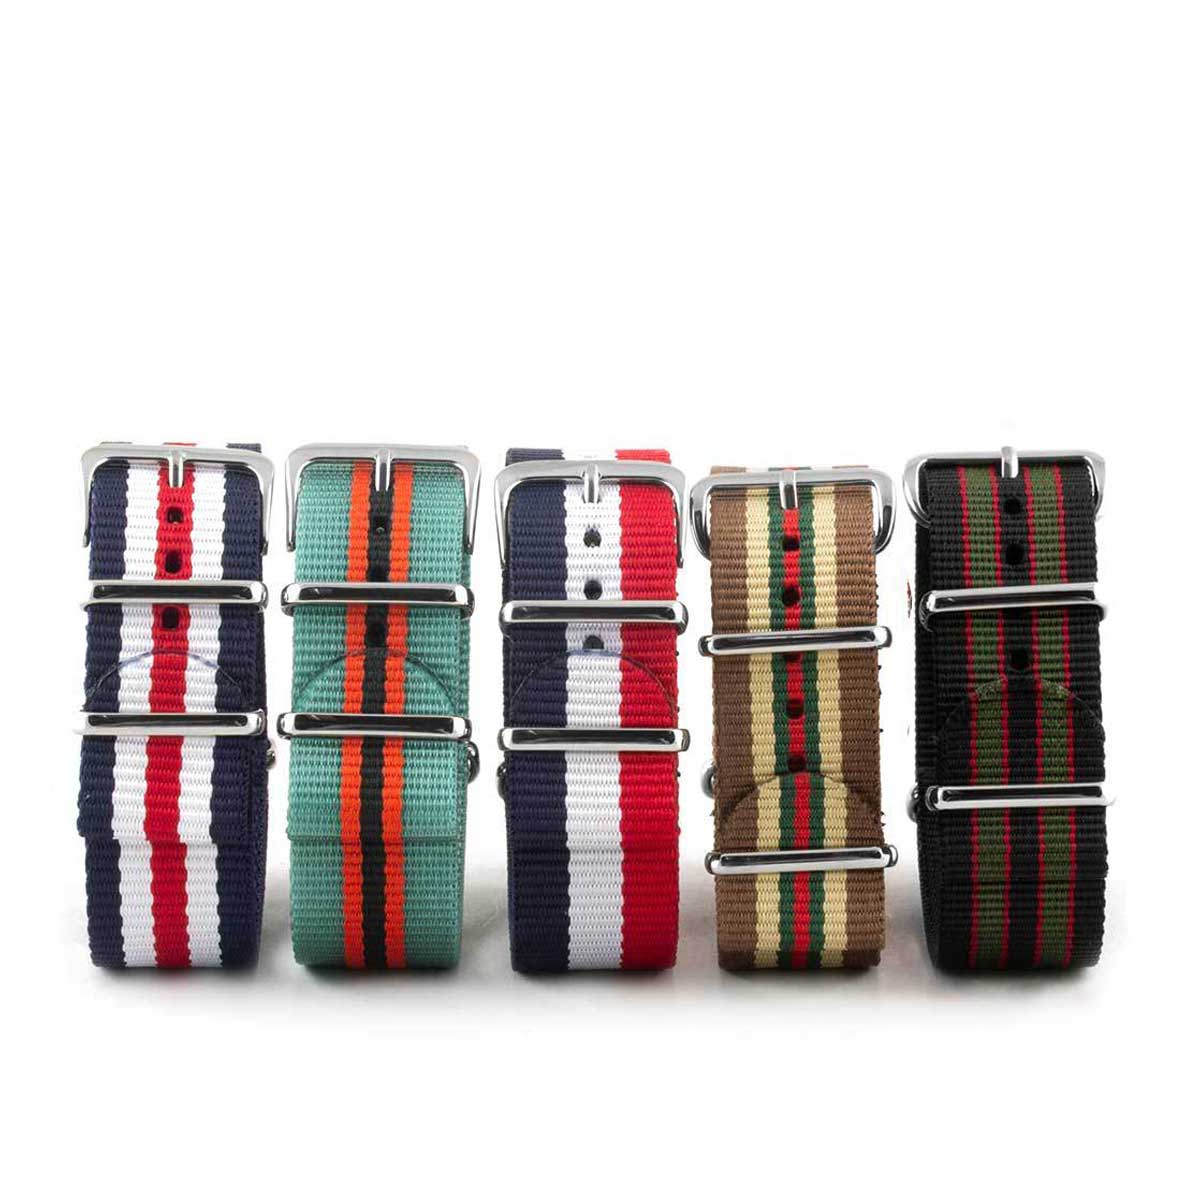 Nylon / fabric nato strap - 3/4 colors stripes (black, brown, blue, red, white, orange, kaki, beige)